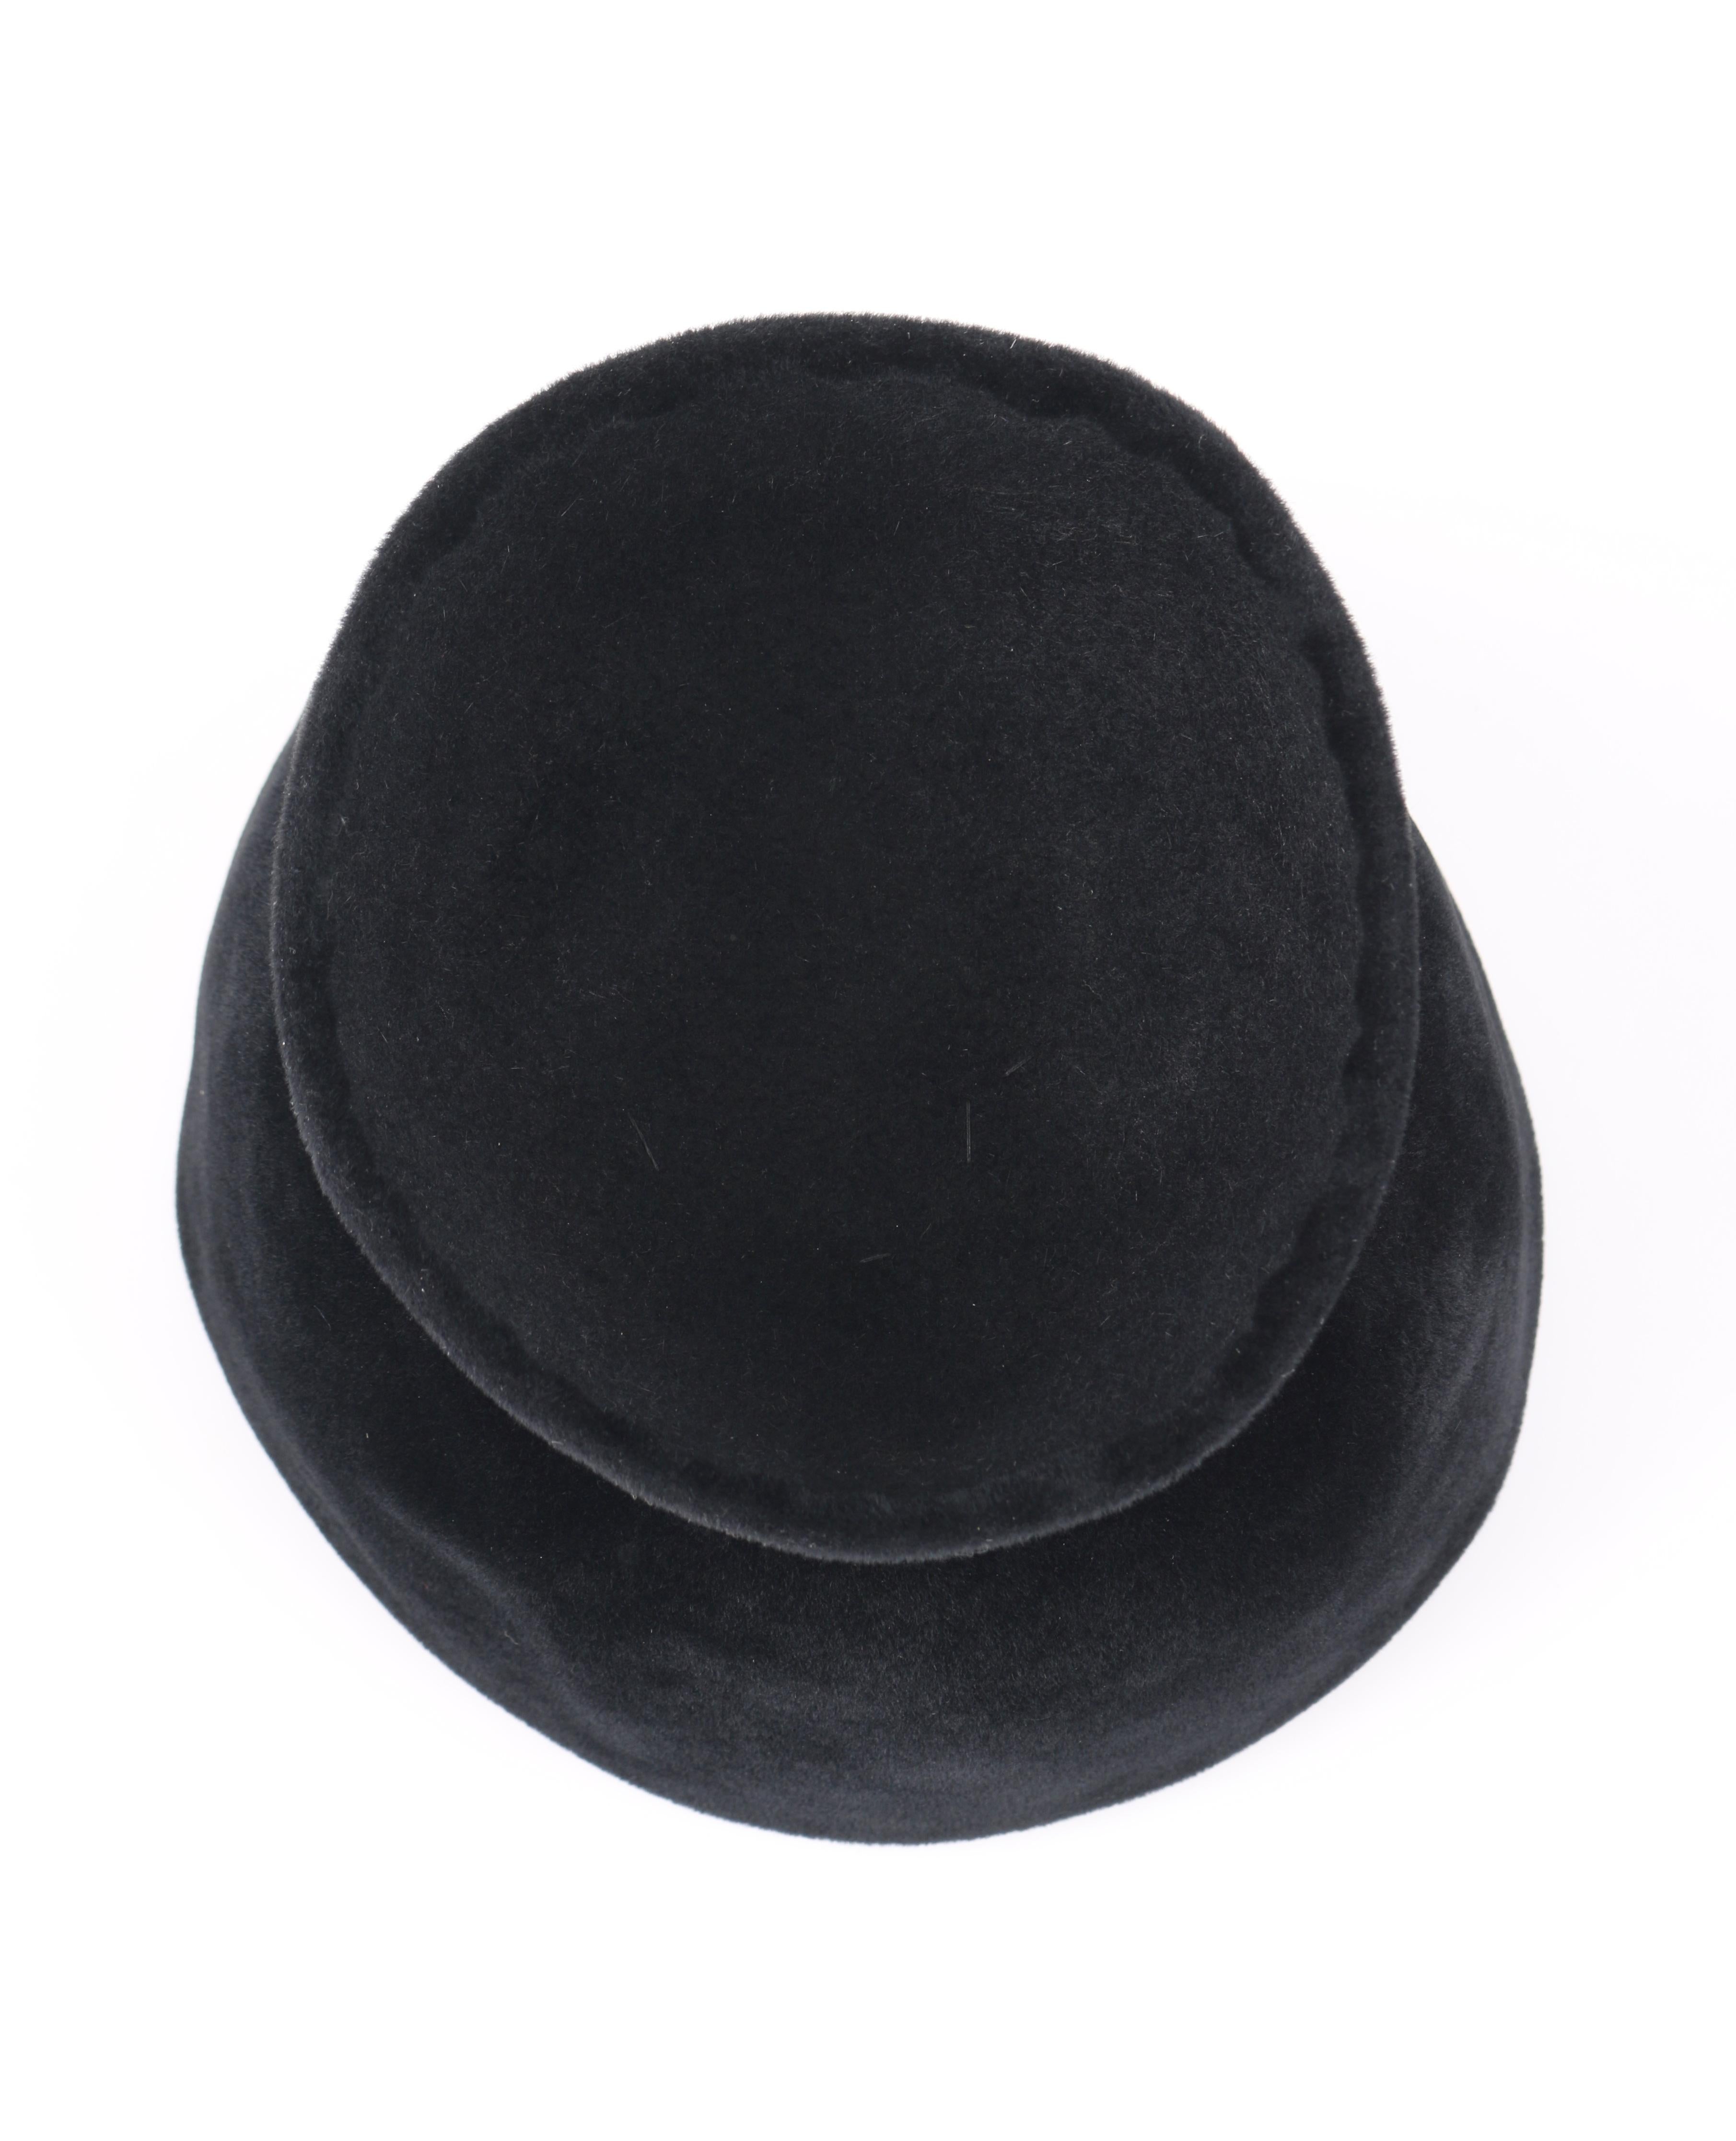 CESARE CANESSA c.1950's Haute Couture Numbered Black Velvet Sculptural Hat  3